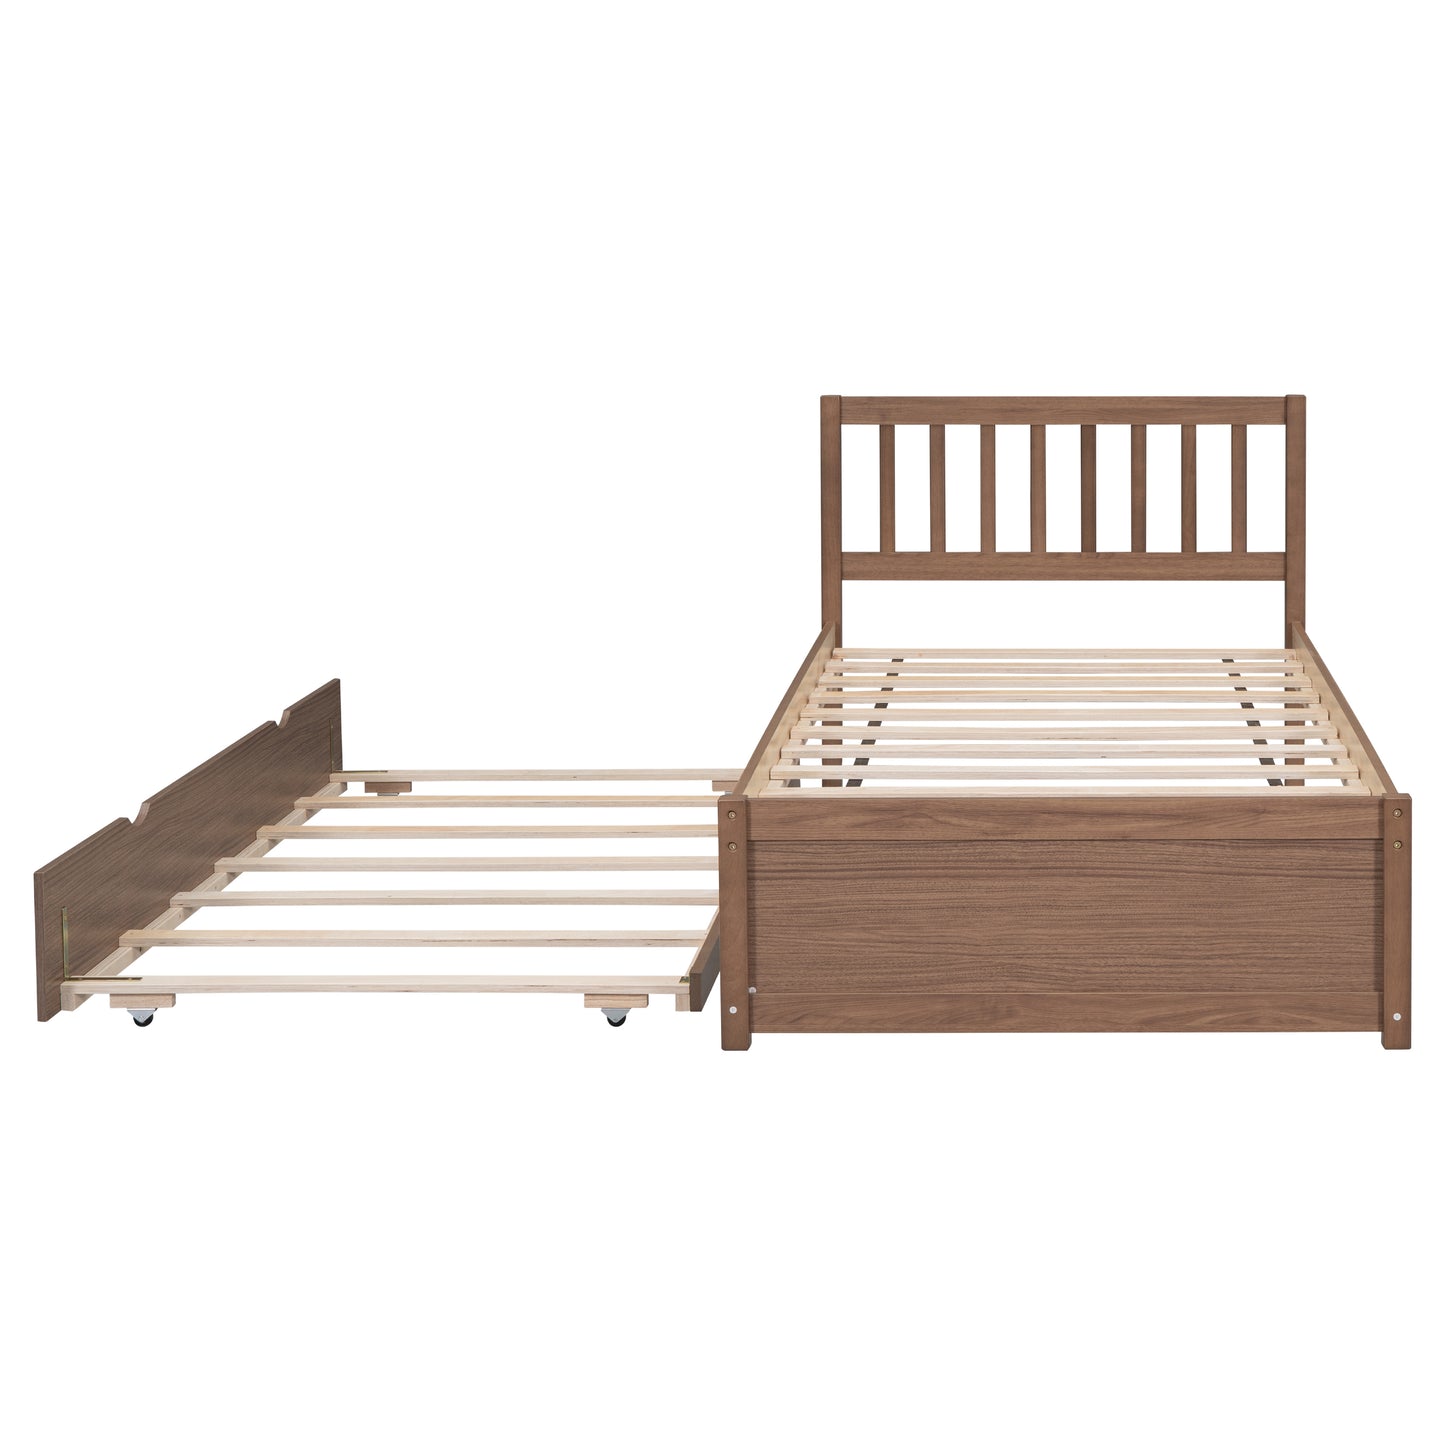 Modern Design Wooden Twin Size Platform Bed Frame with Trundle for Walnut Color